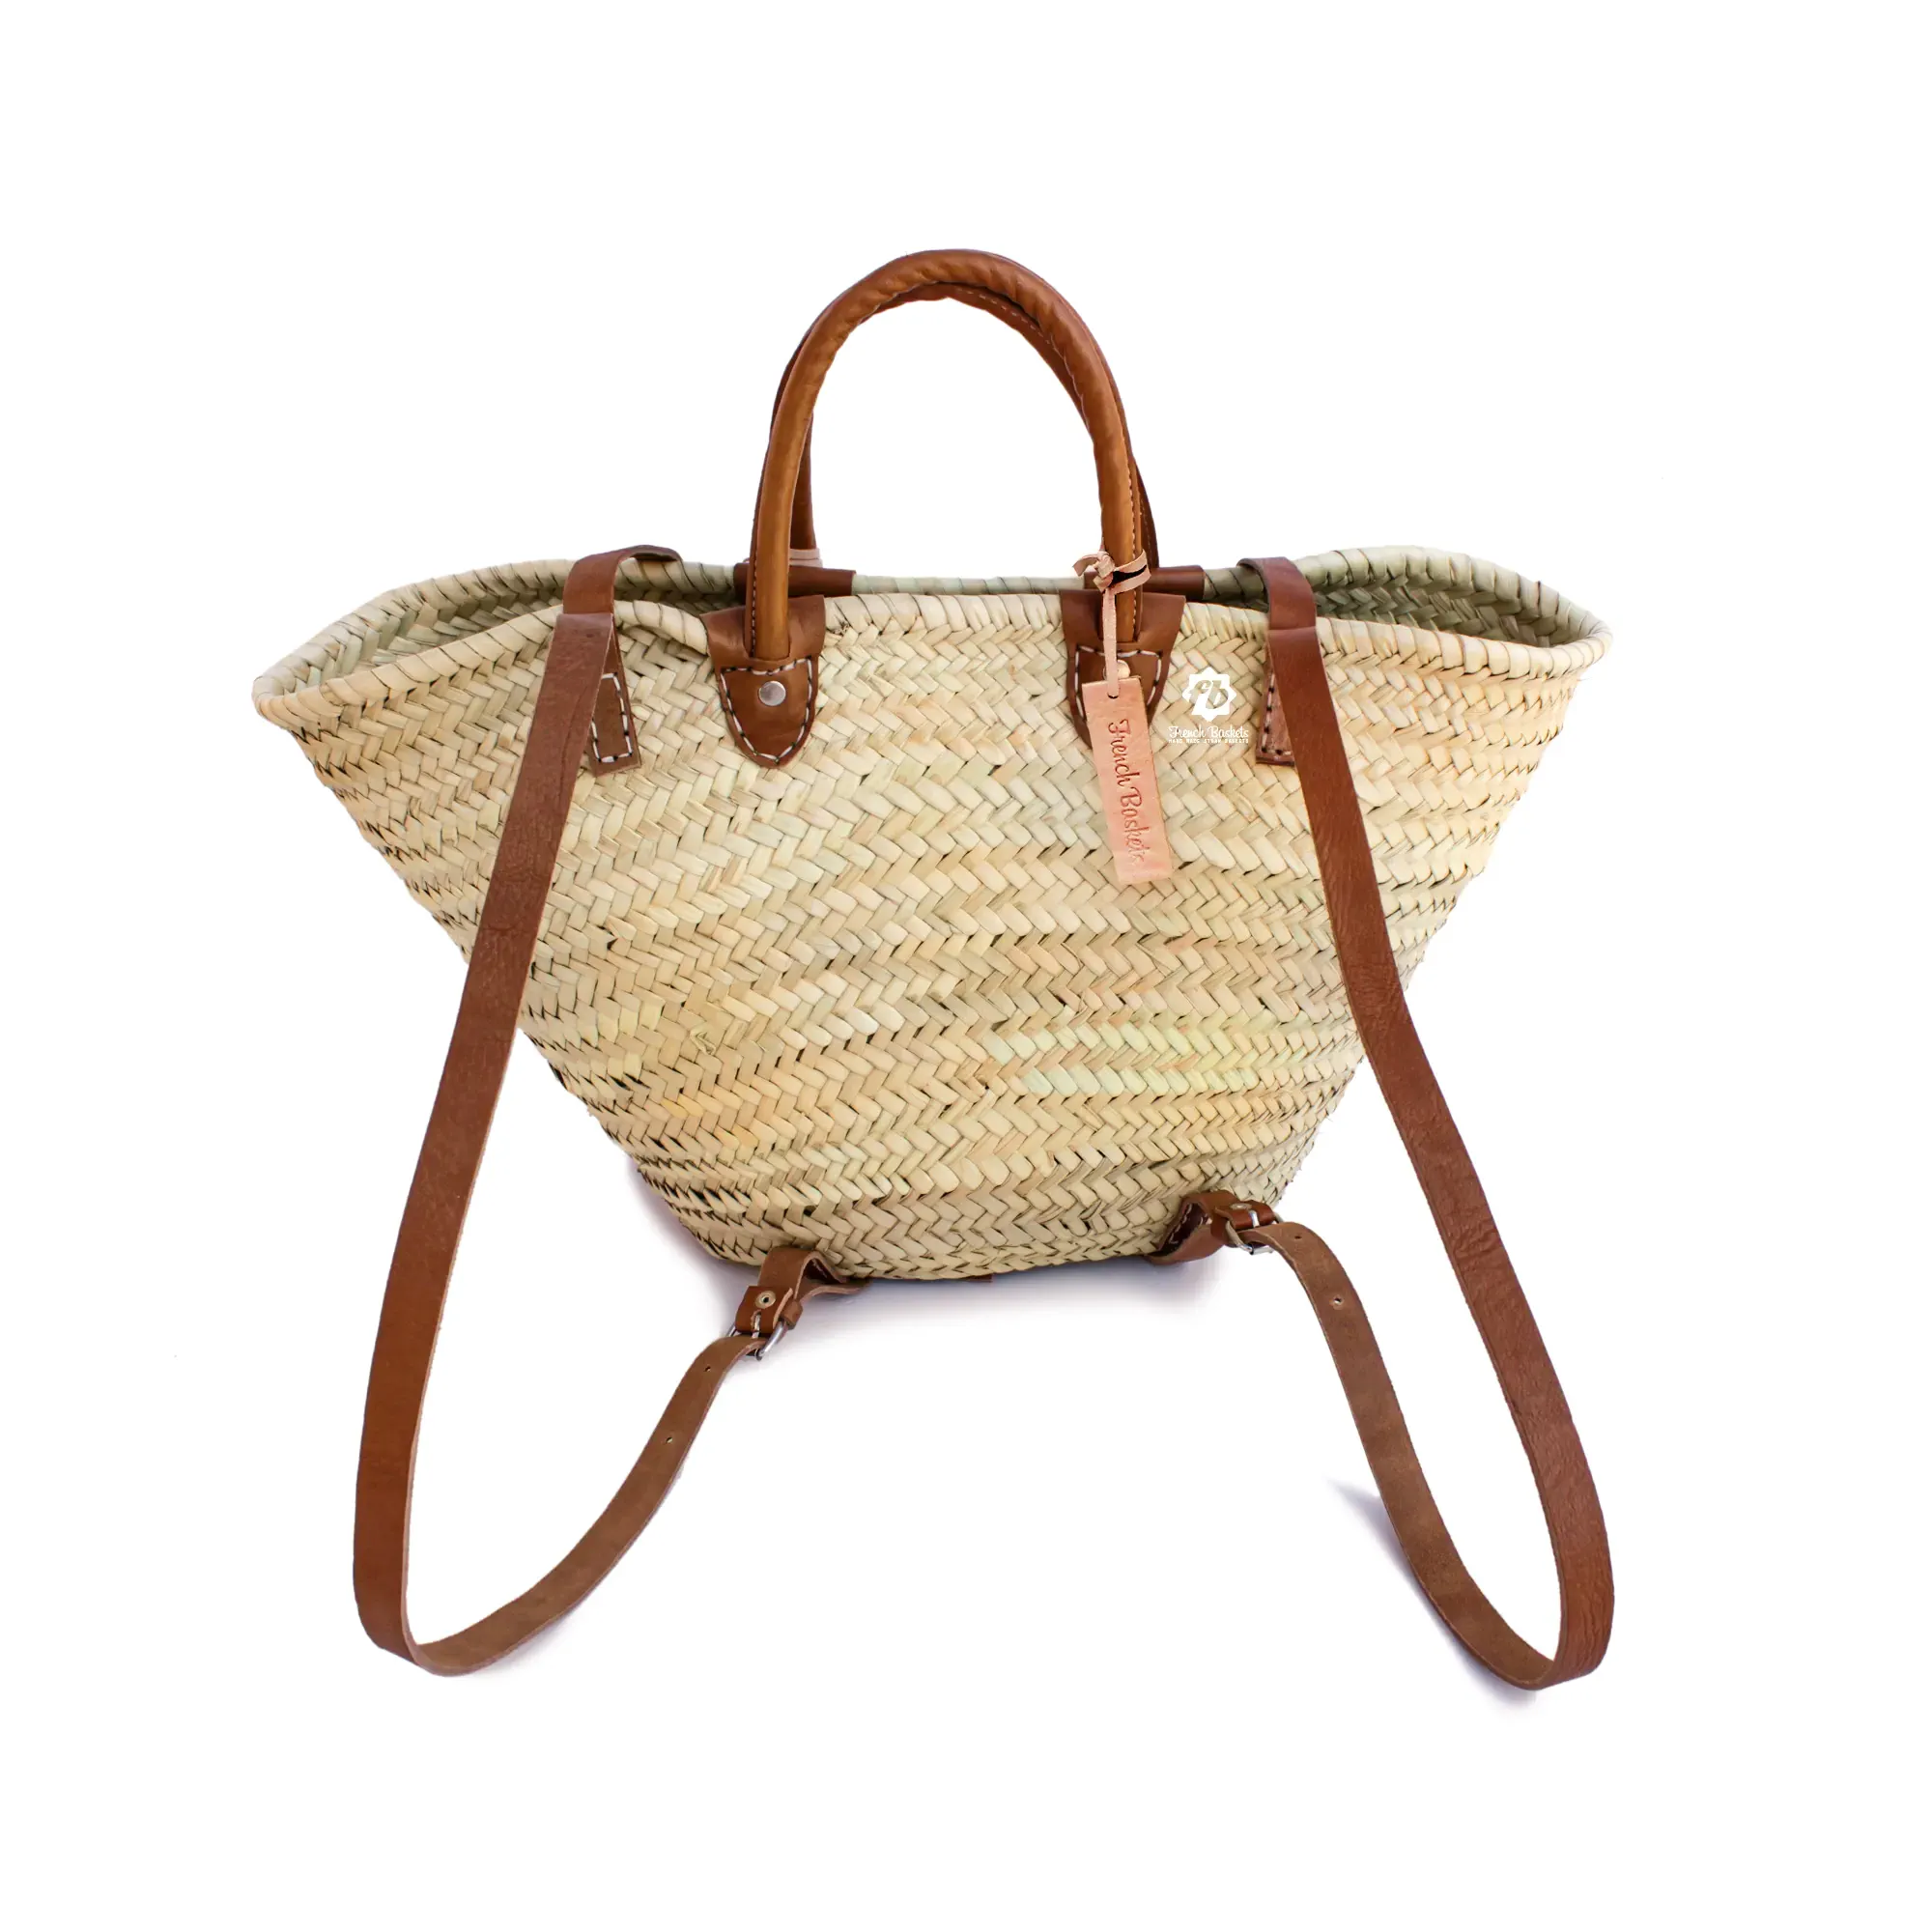 https://french-baskets.com/wp-content/uploads/2020/02/Luxury-Straw-Backpack-V2-french-baskets.webp